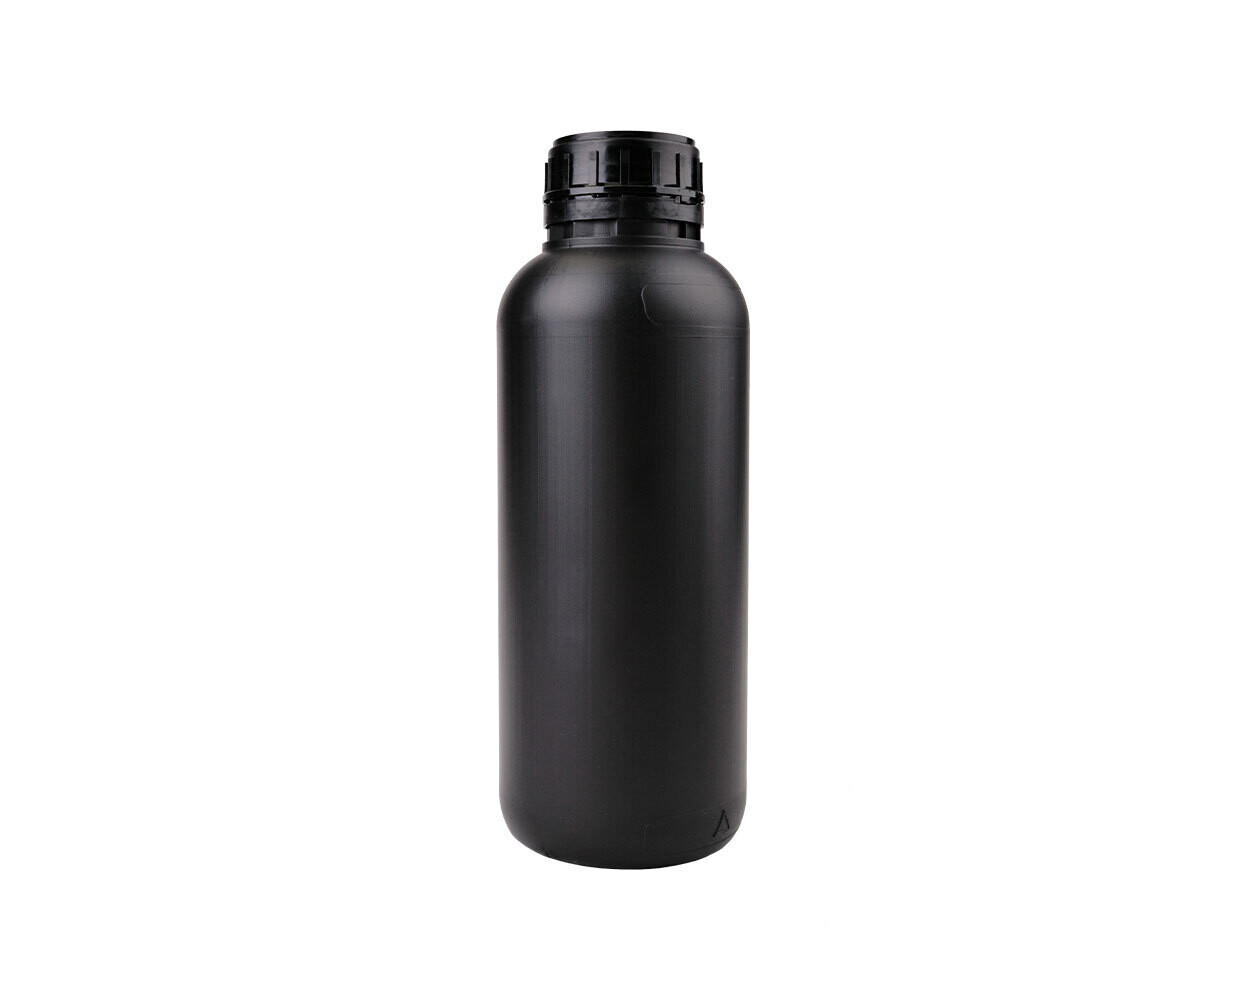 Rollei Black Magic wide neck bottle lightproof for 1000ml